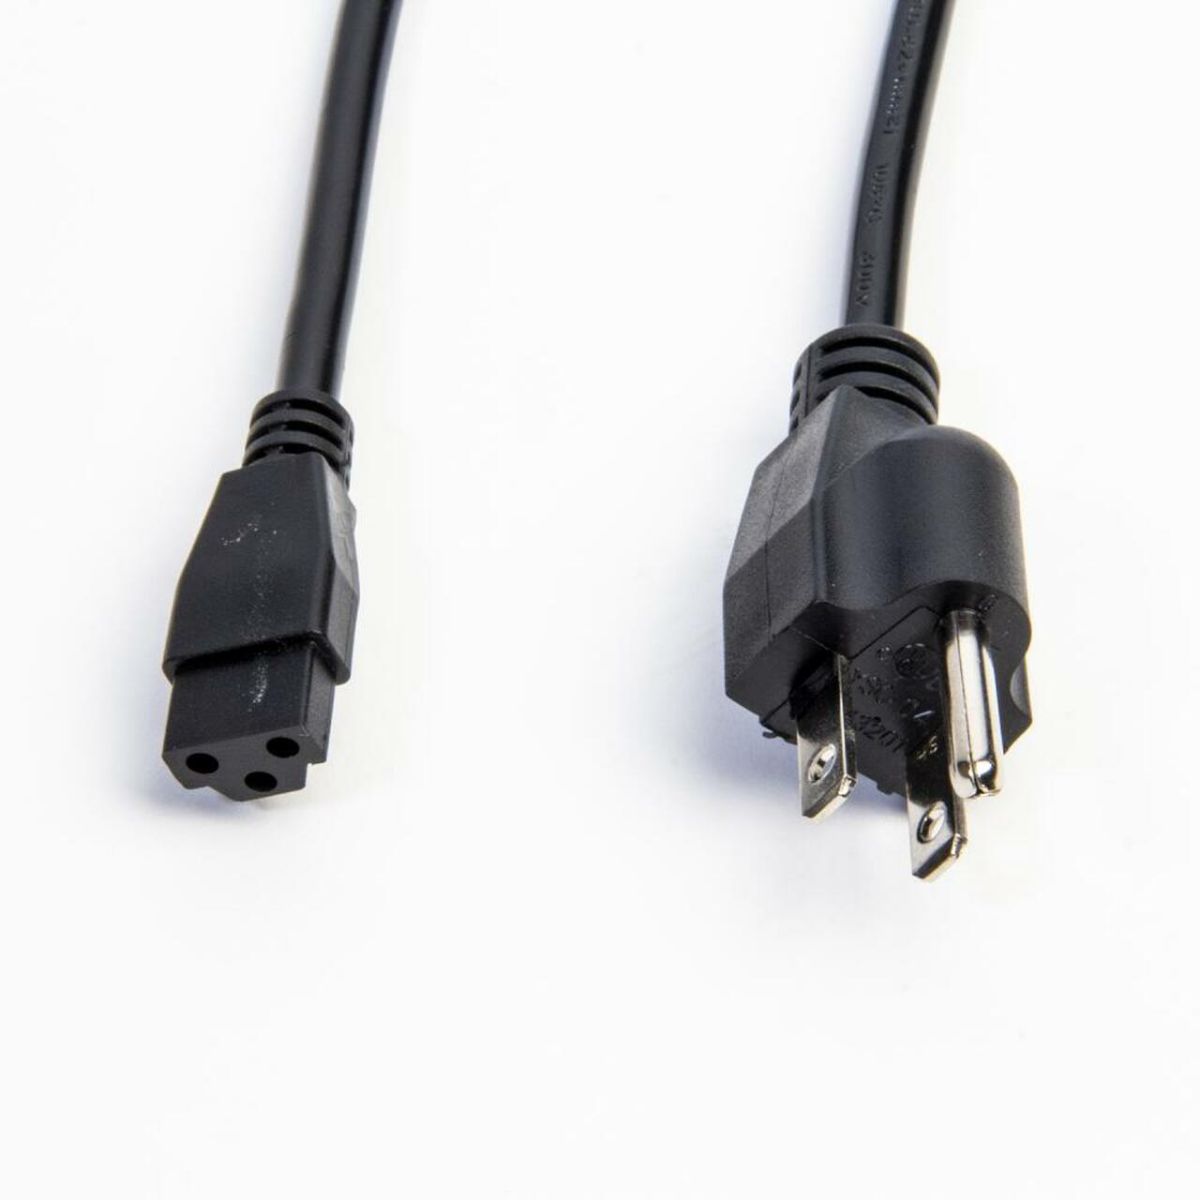 5ft Plug-in Power Cord For TunableTask Task Light, Black